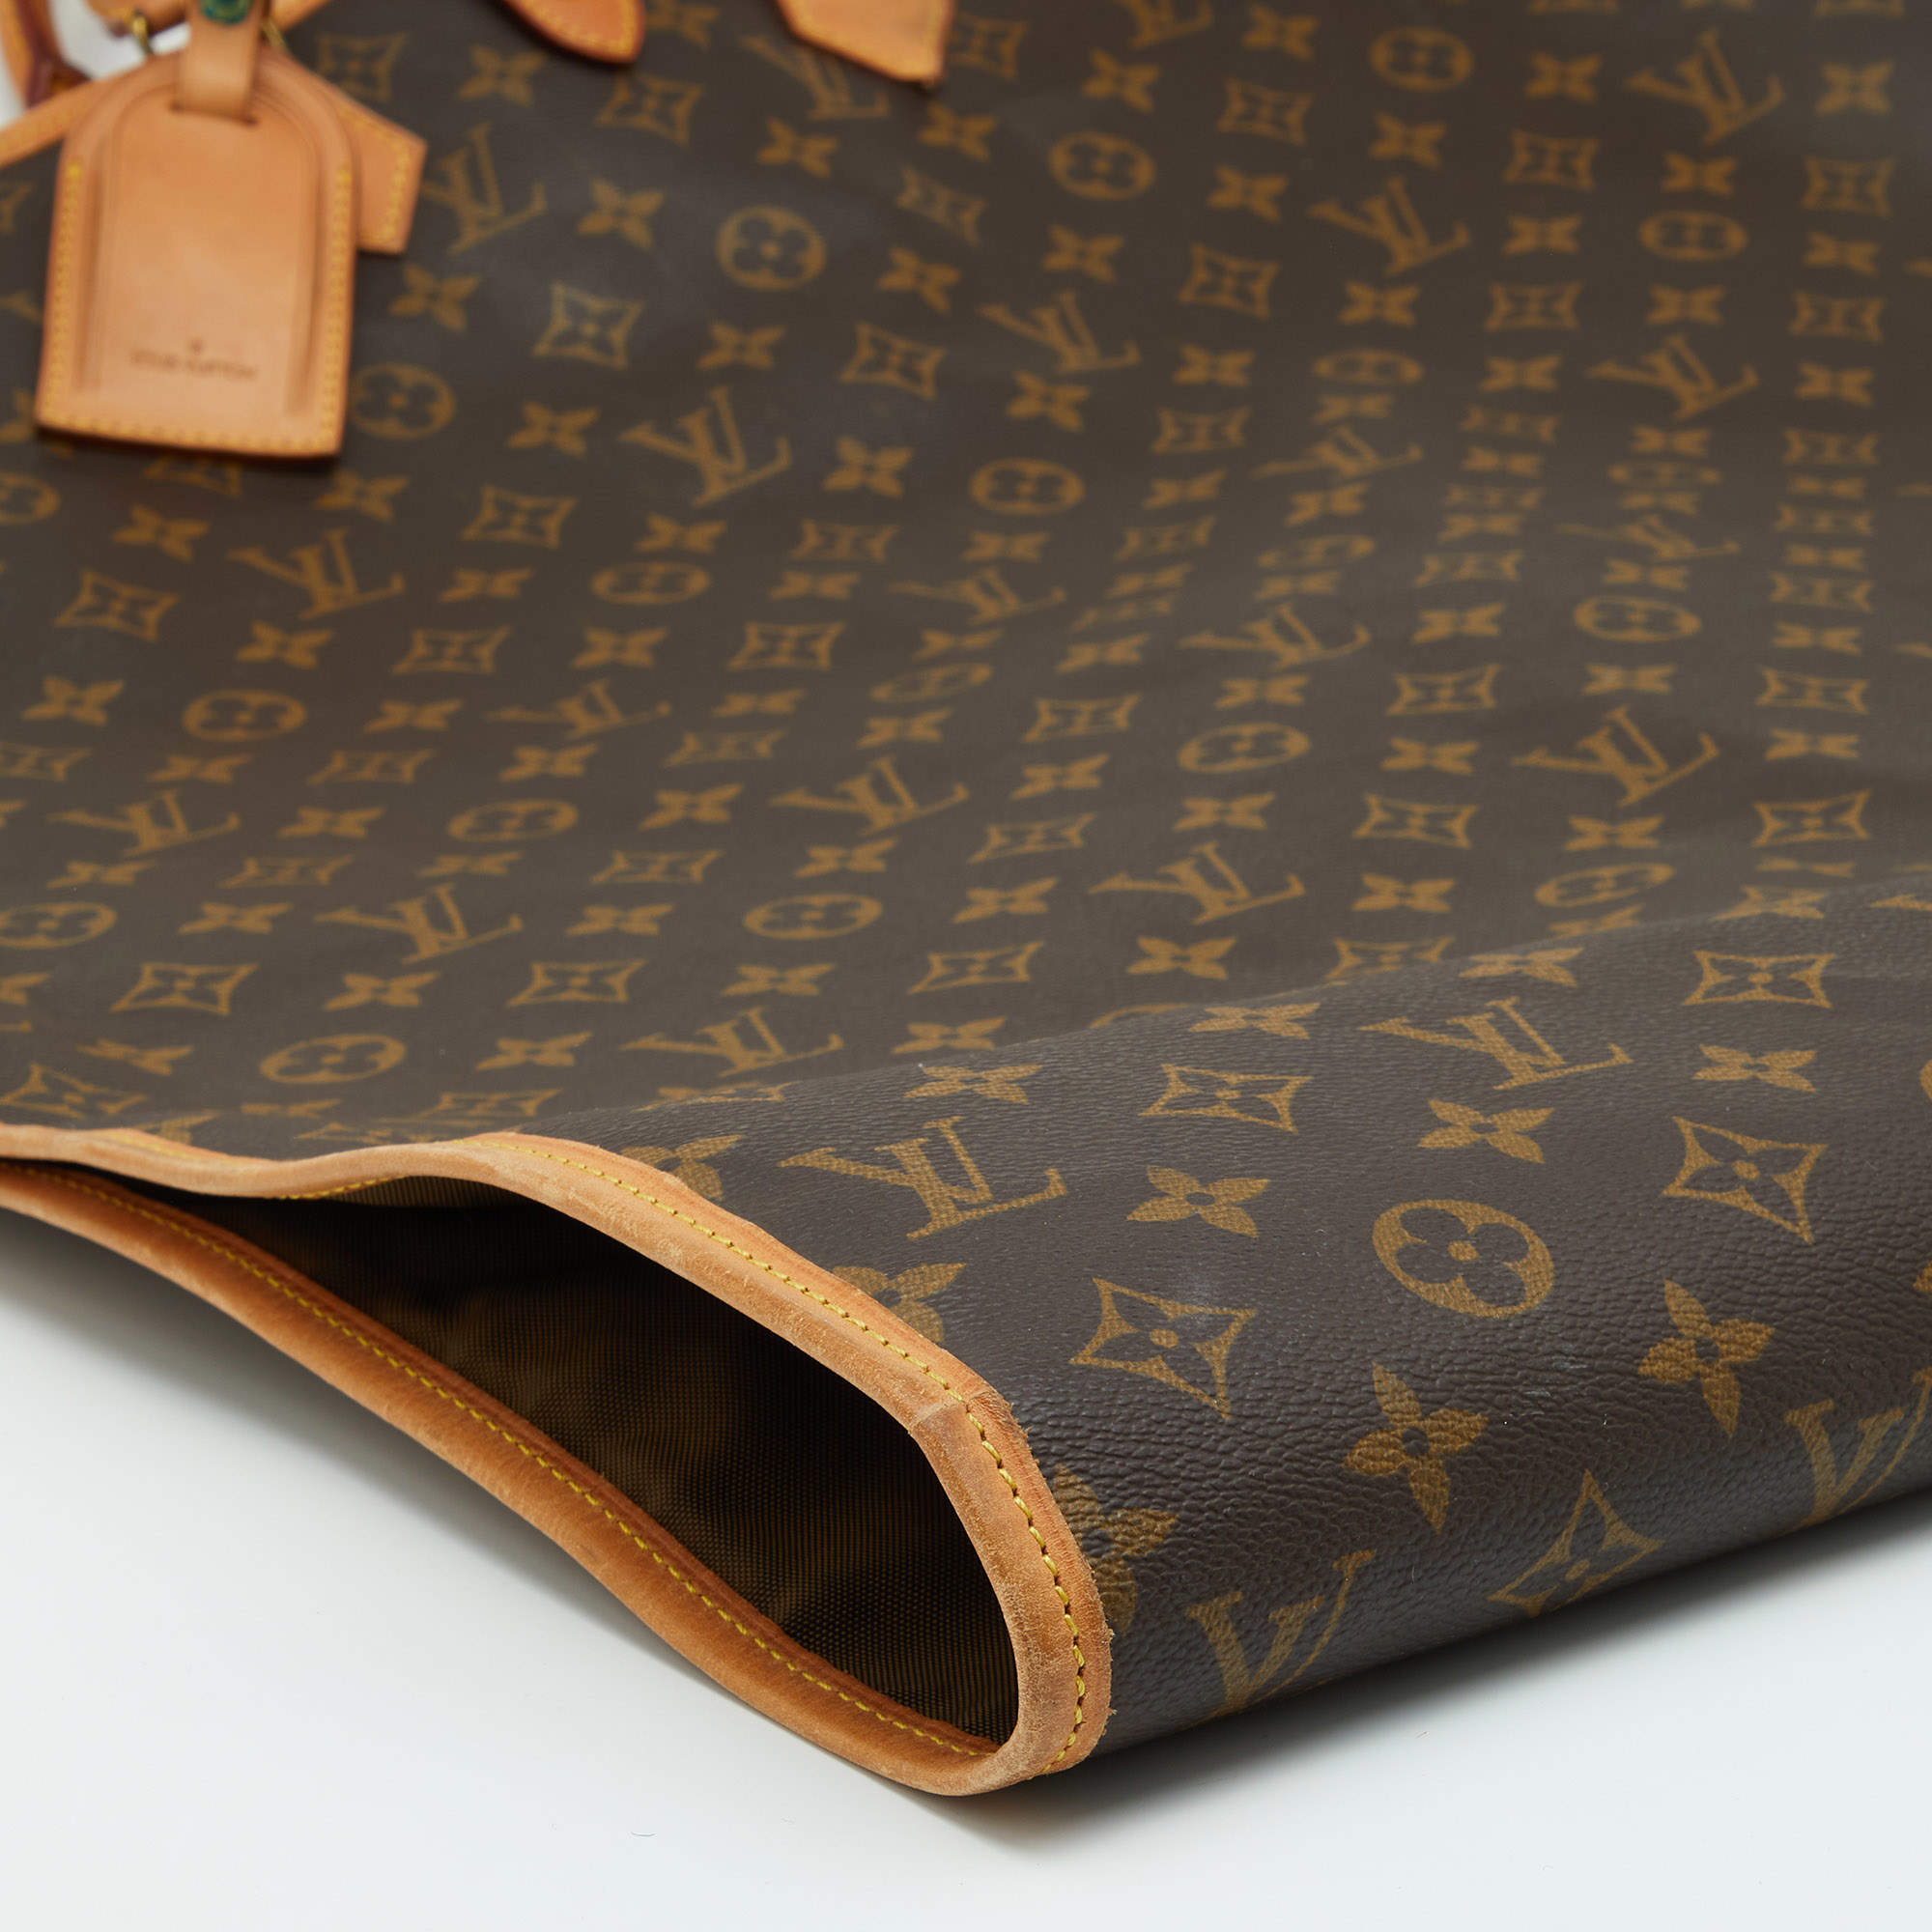 Louis Vuitton Monogram Garment Cover 2 Hangers 512163